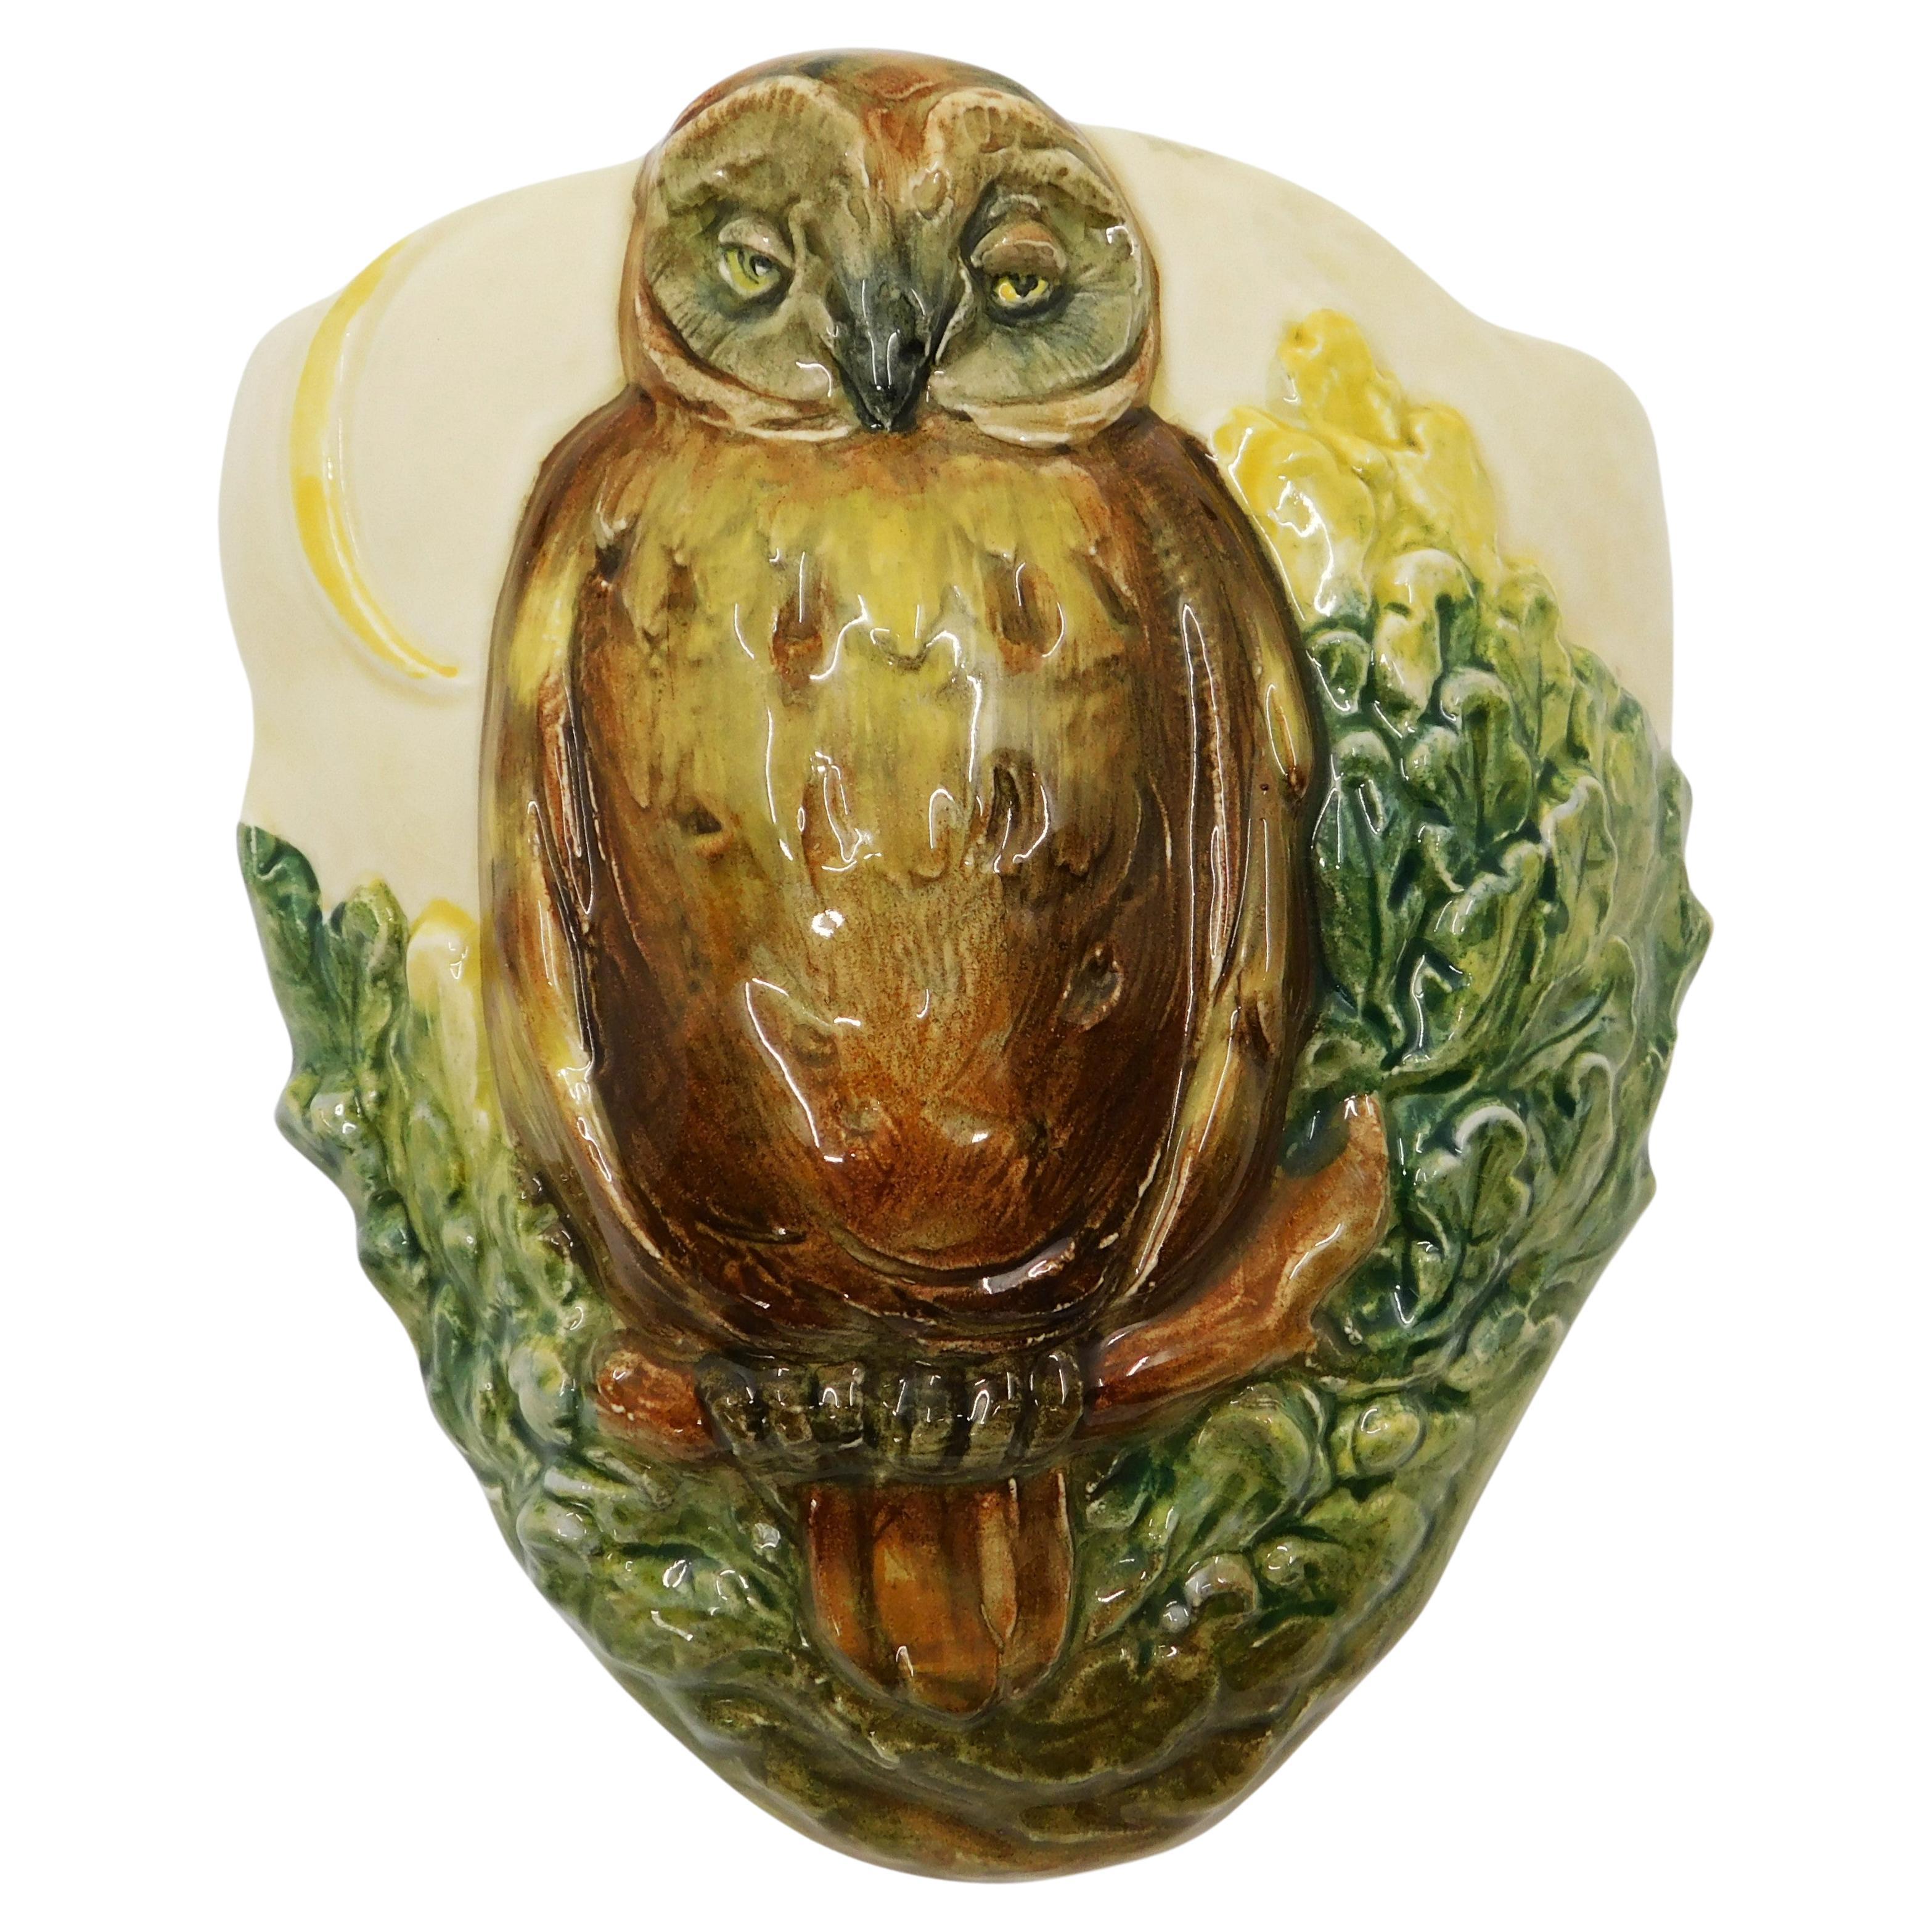 Rare Vintage Circa 1930 Royal Doulton Wall Pocket Vase Owl High Relief D5771 For Sale